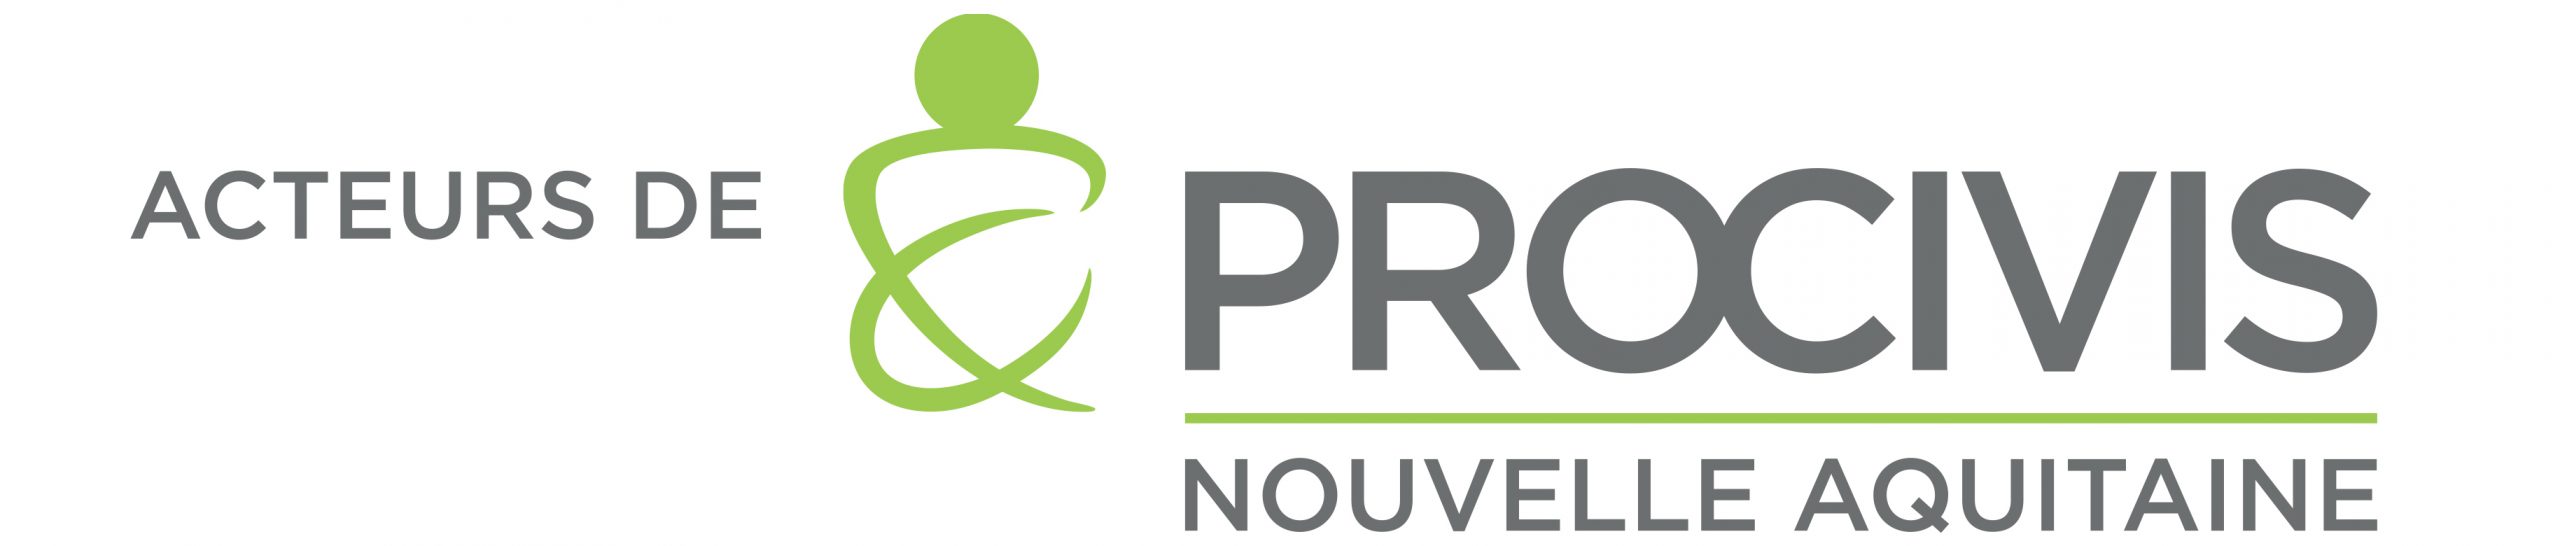 logo PROCIVIS